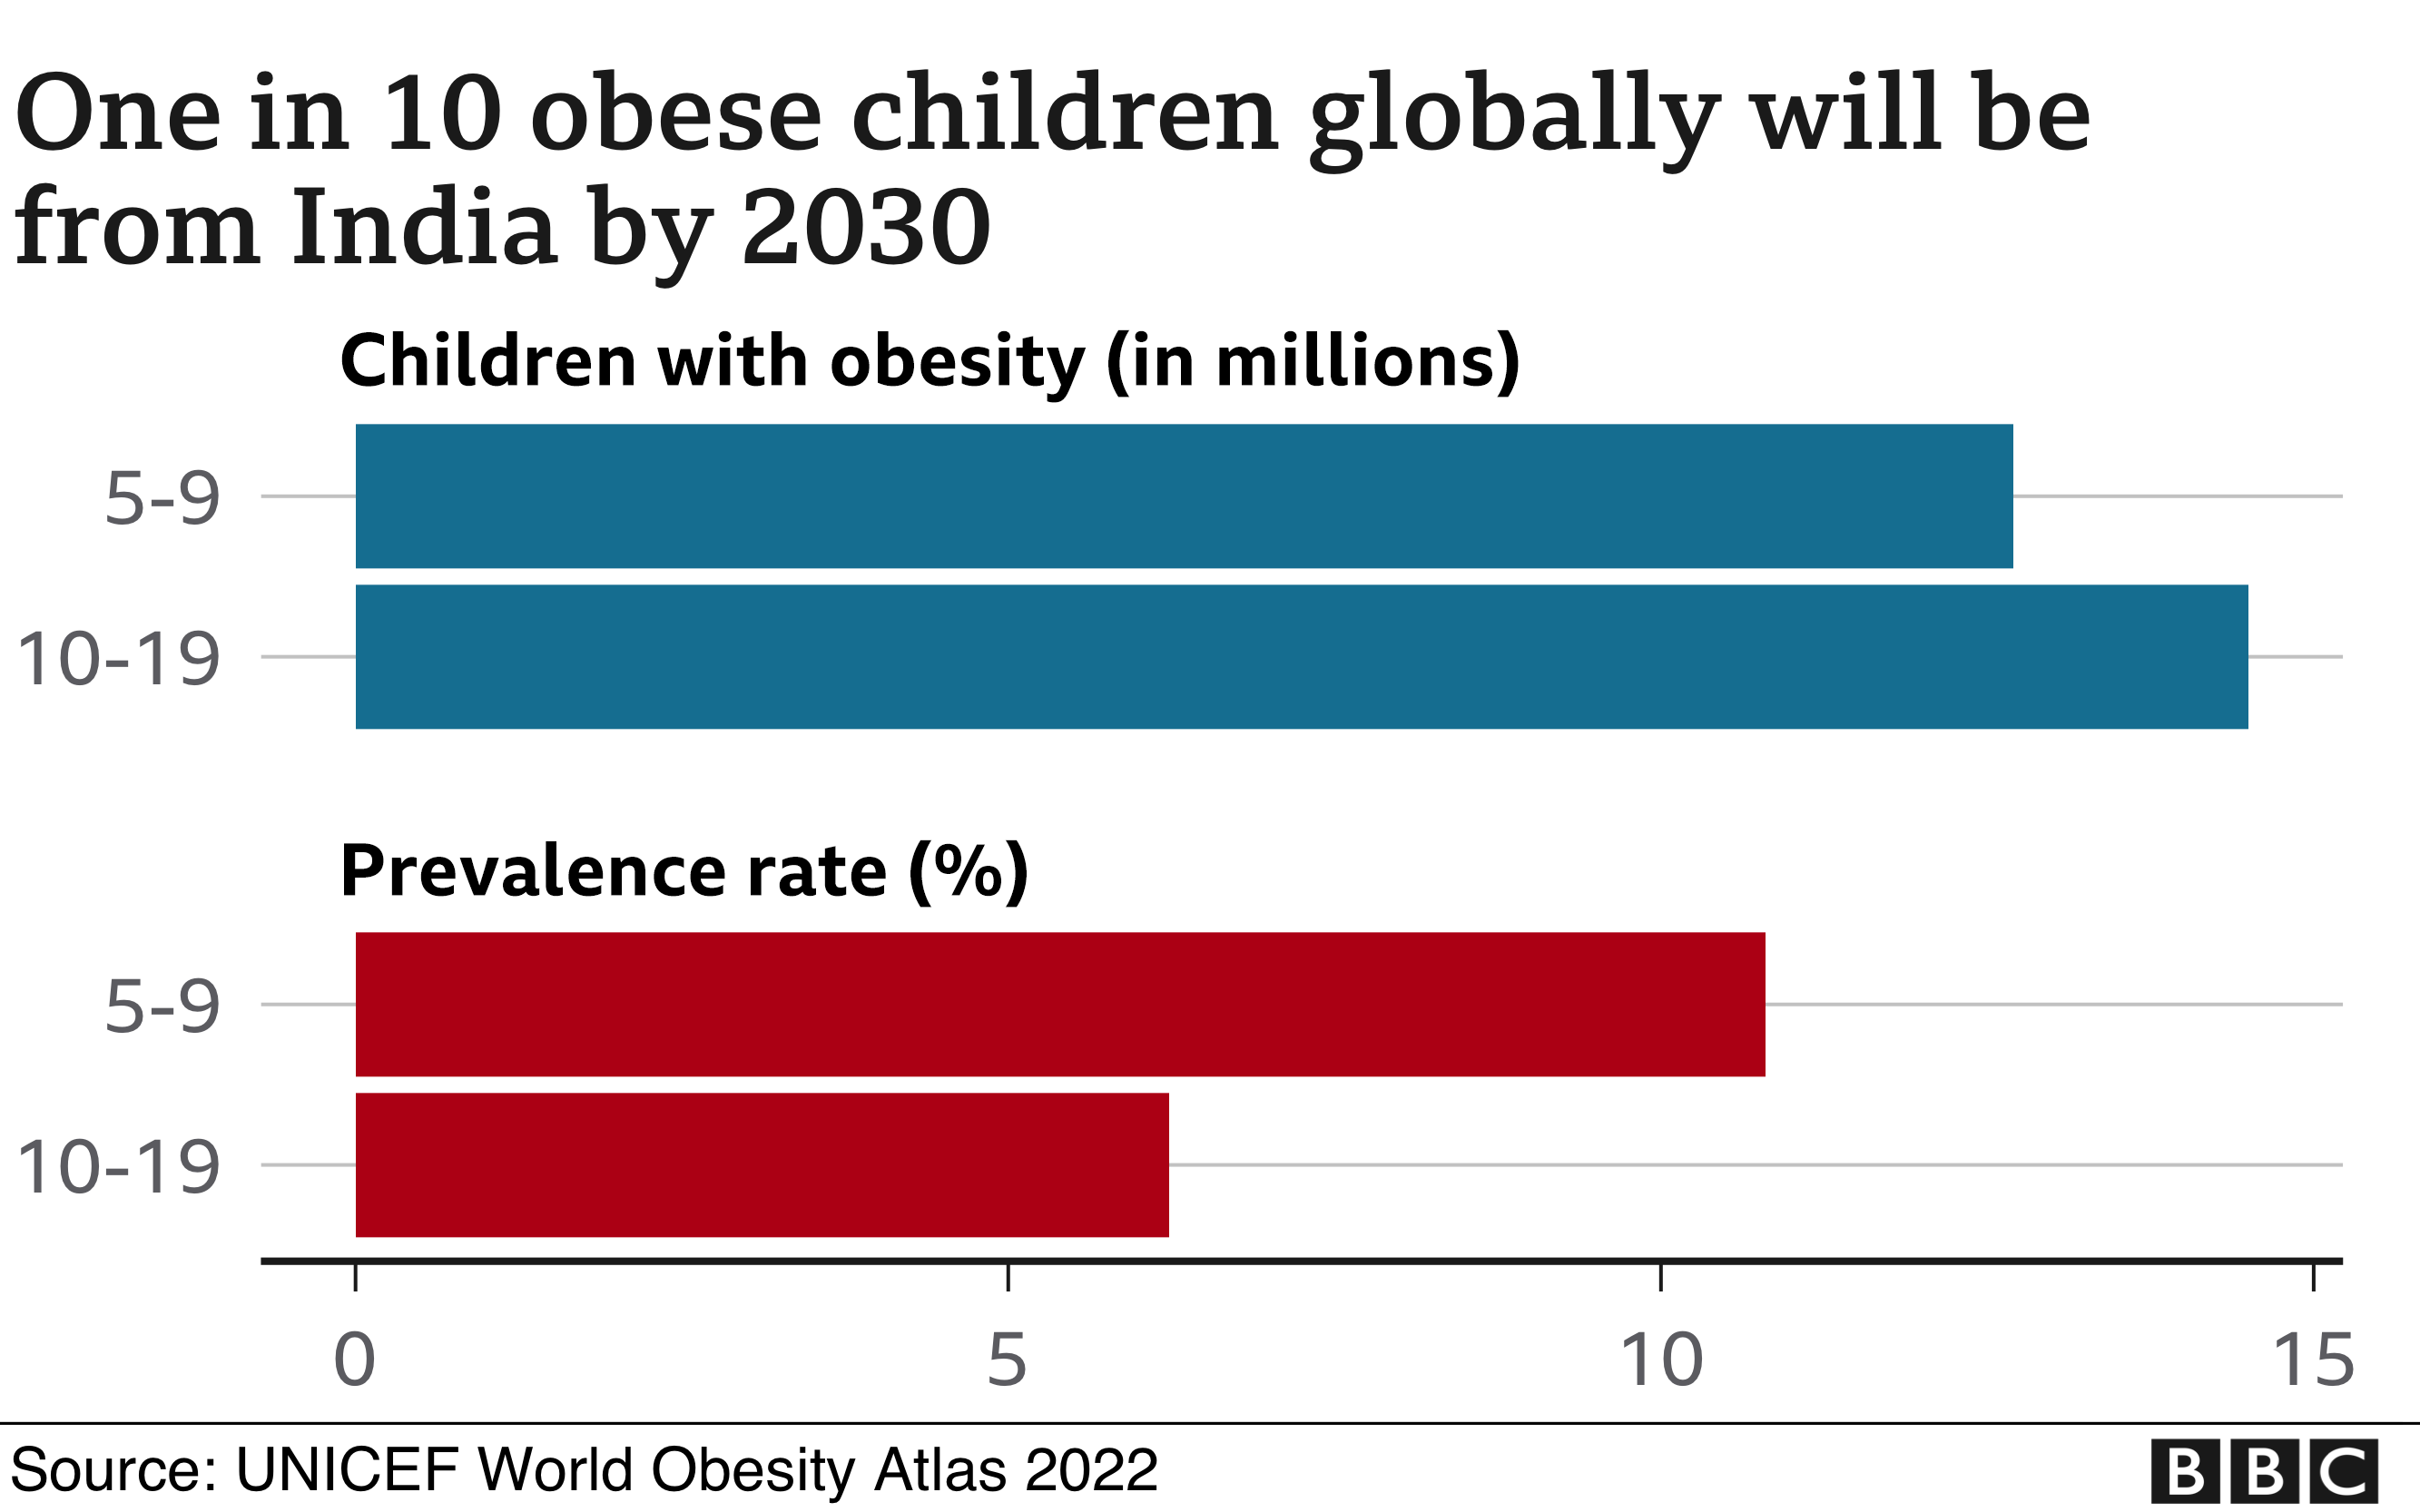 obesity chart